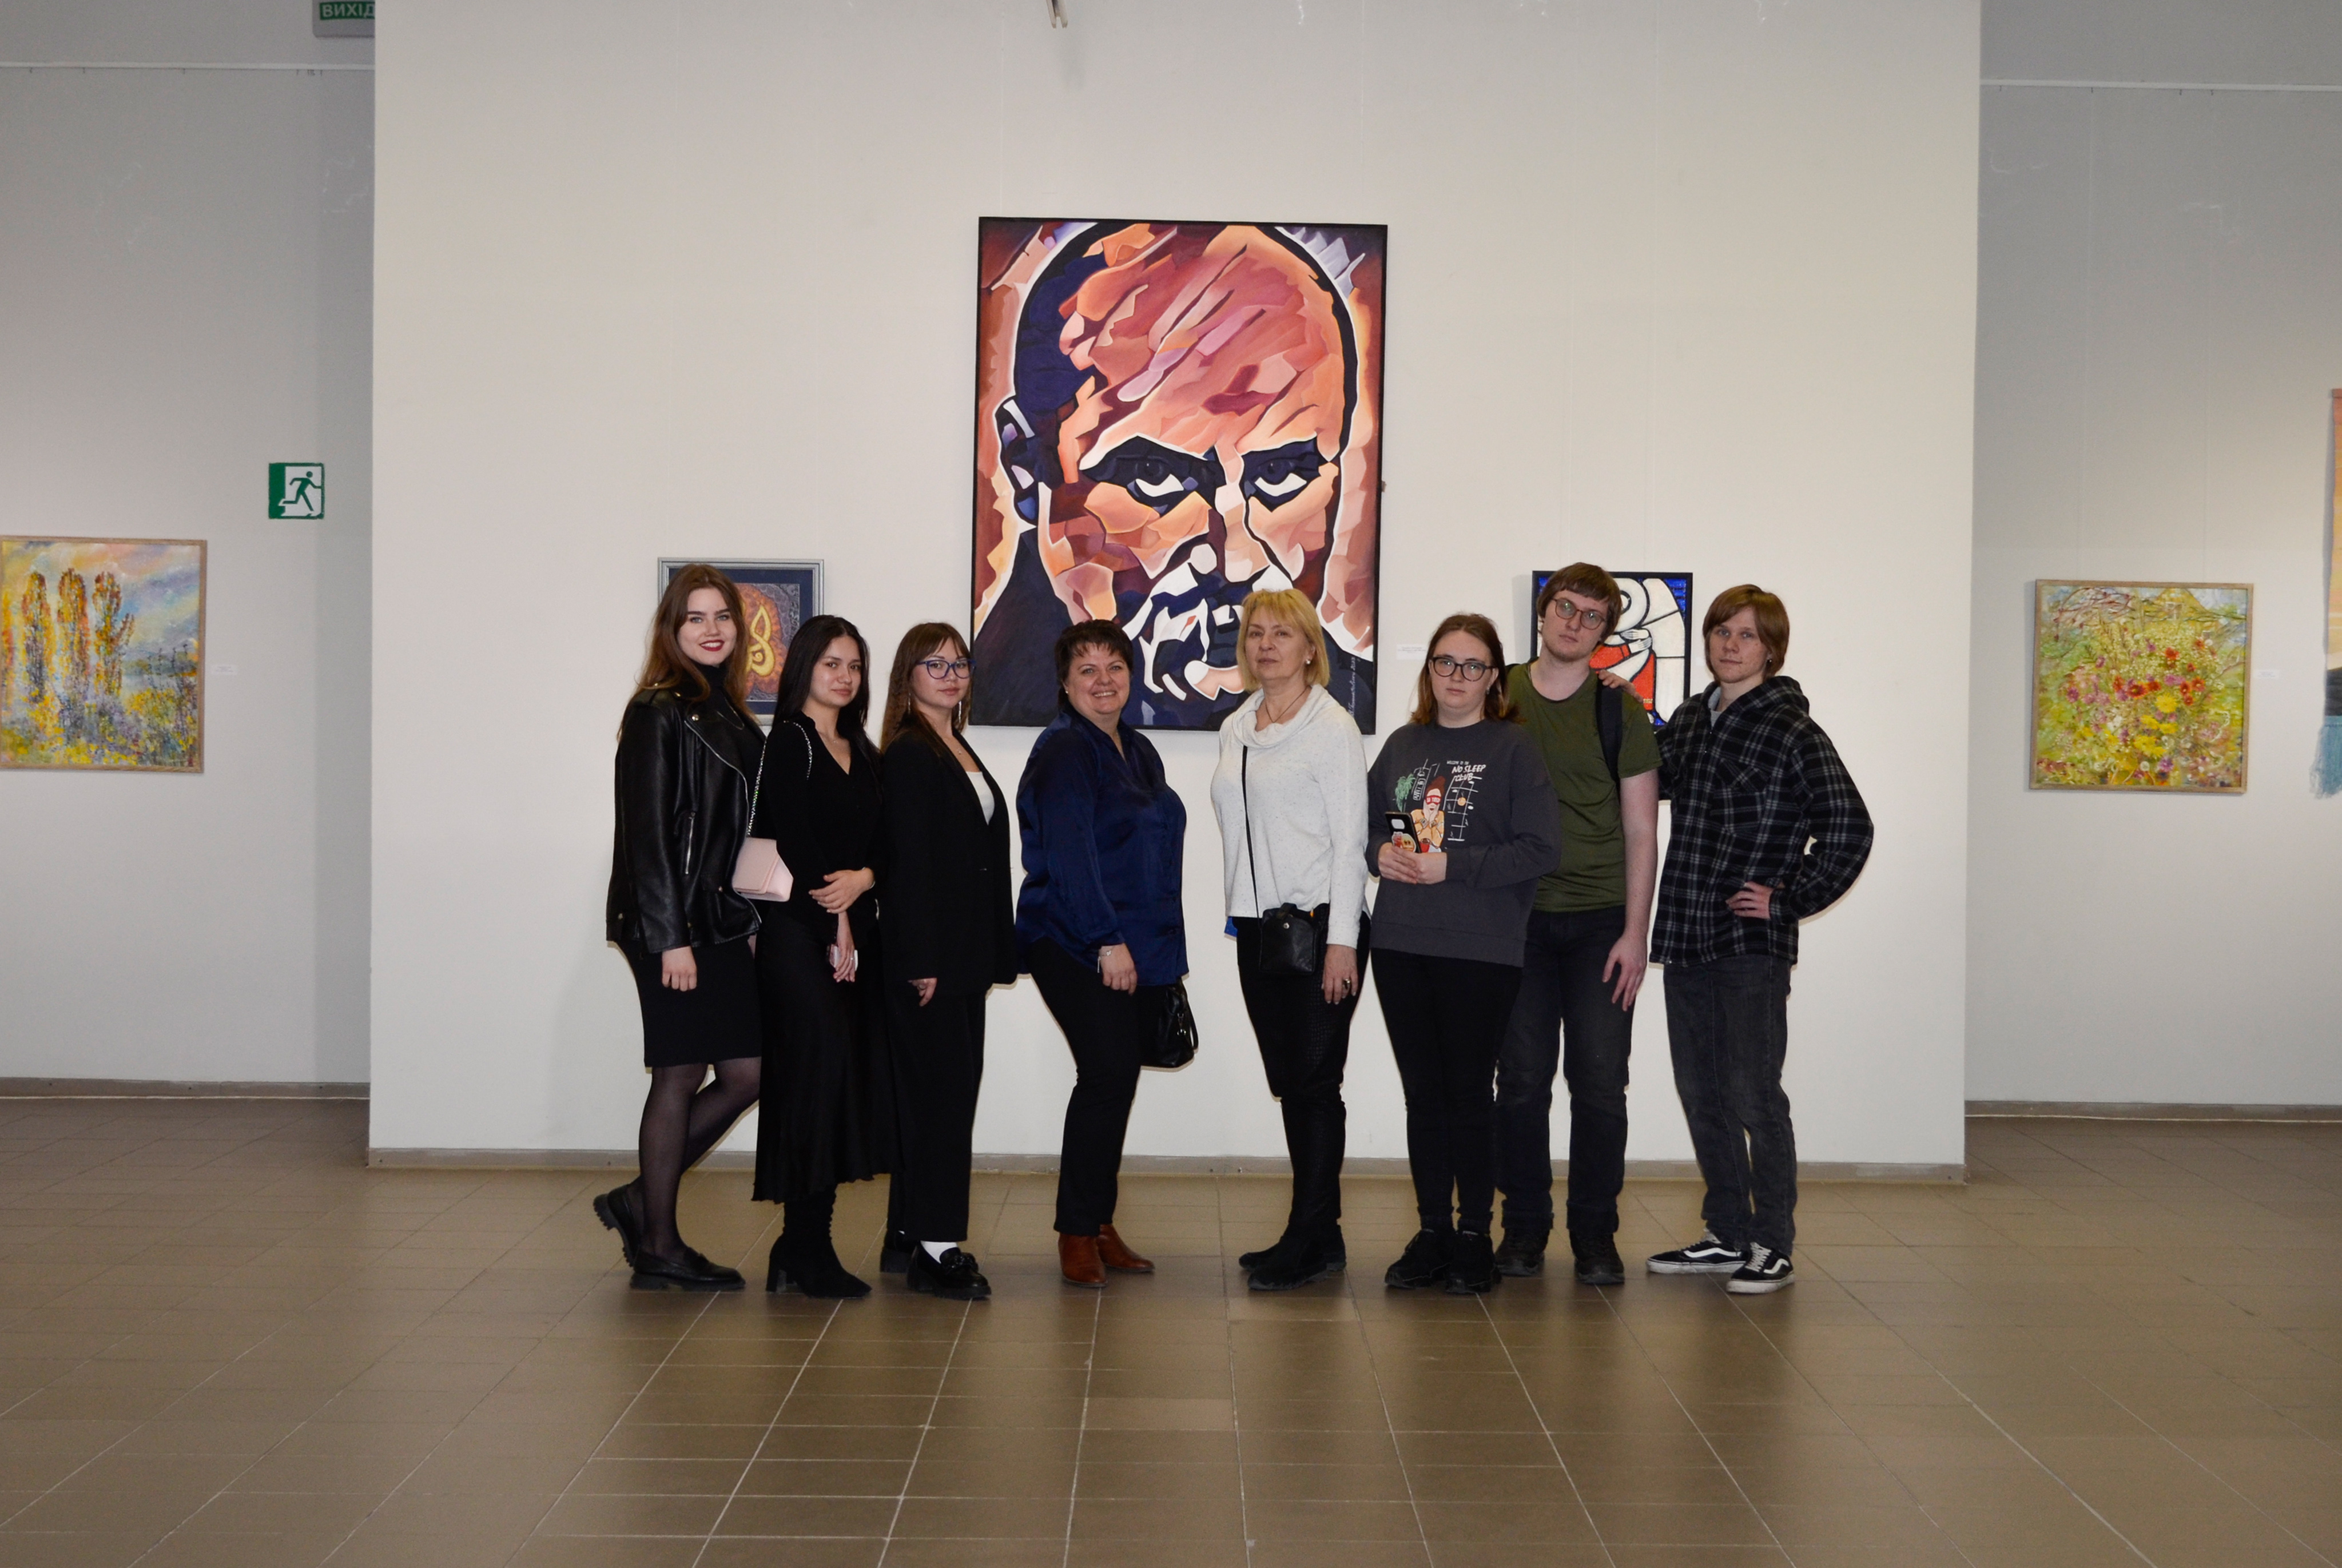 Future translators practise consecutive interpreting during a tour of the Poltava Art Museum